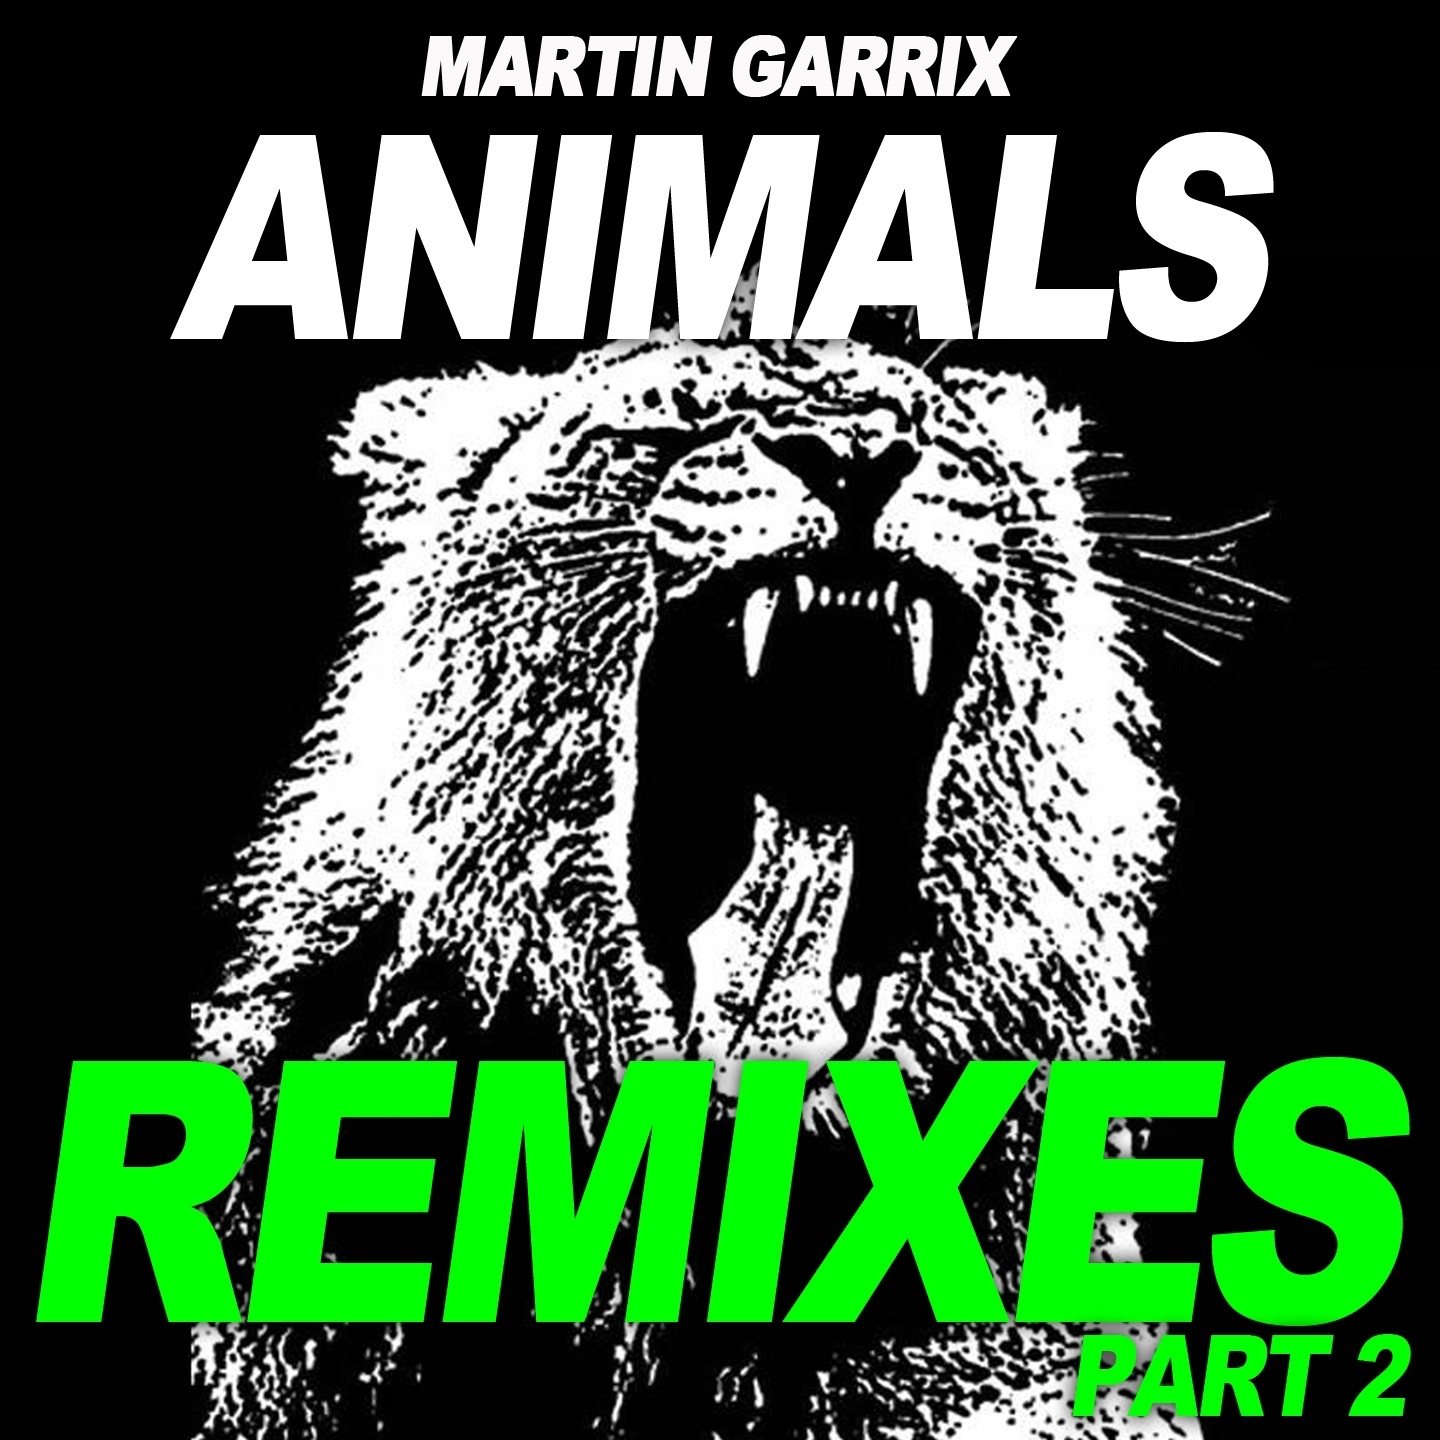 songs like animals martin garrix